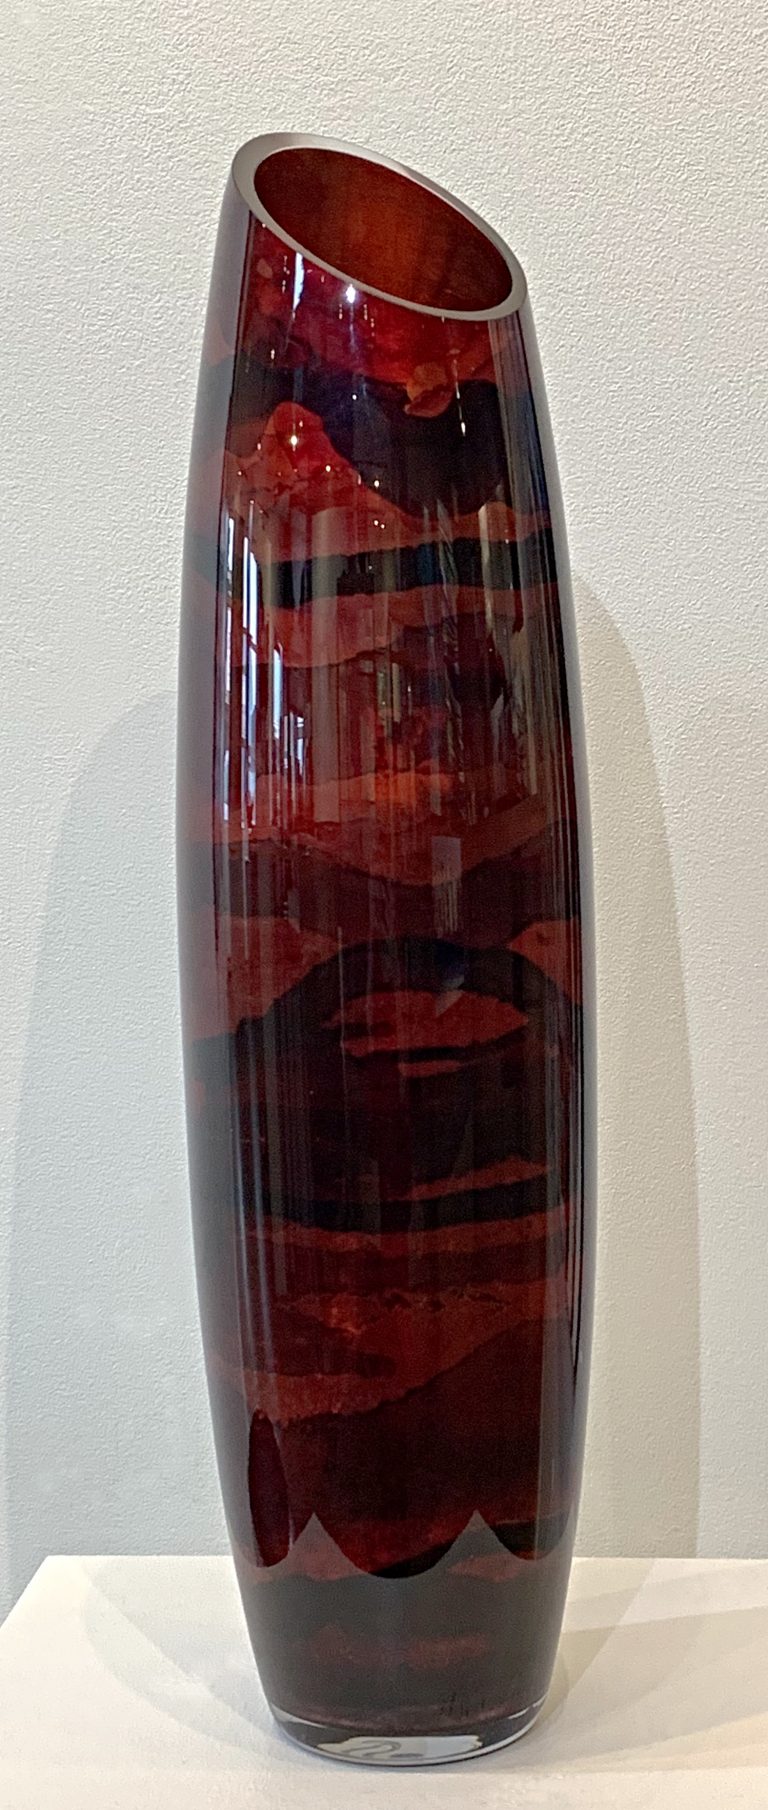 Medium red bullet vase, hand gilded by David Graff | Effusion Art Gallery + Cast Glass Studio, Invermere BC